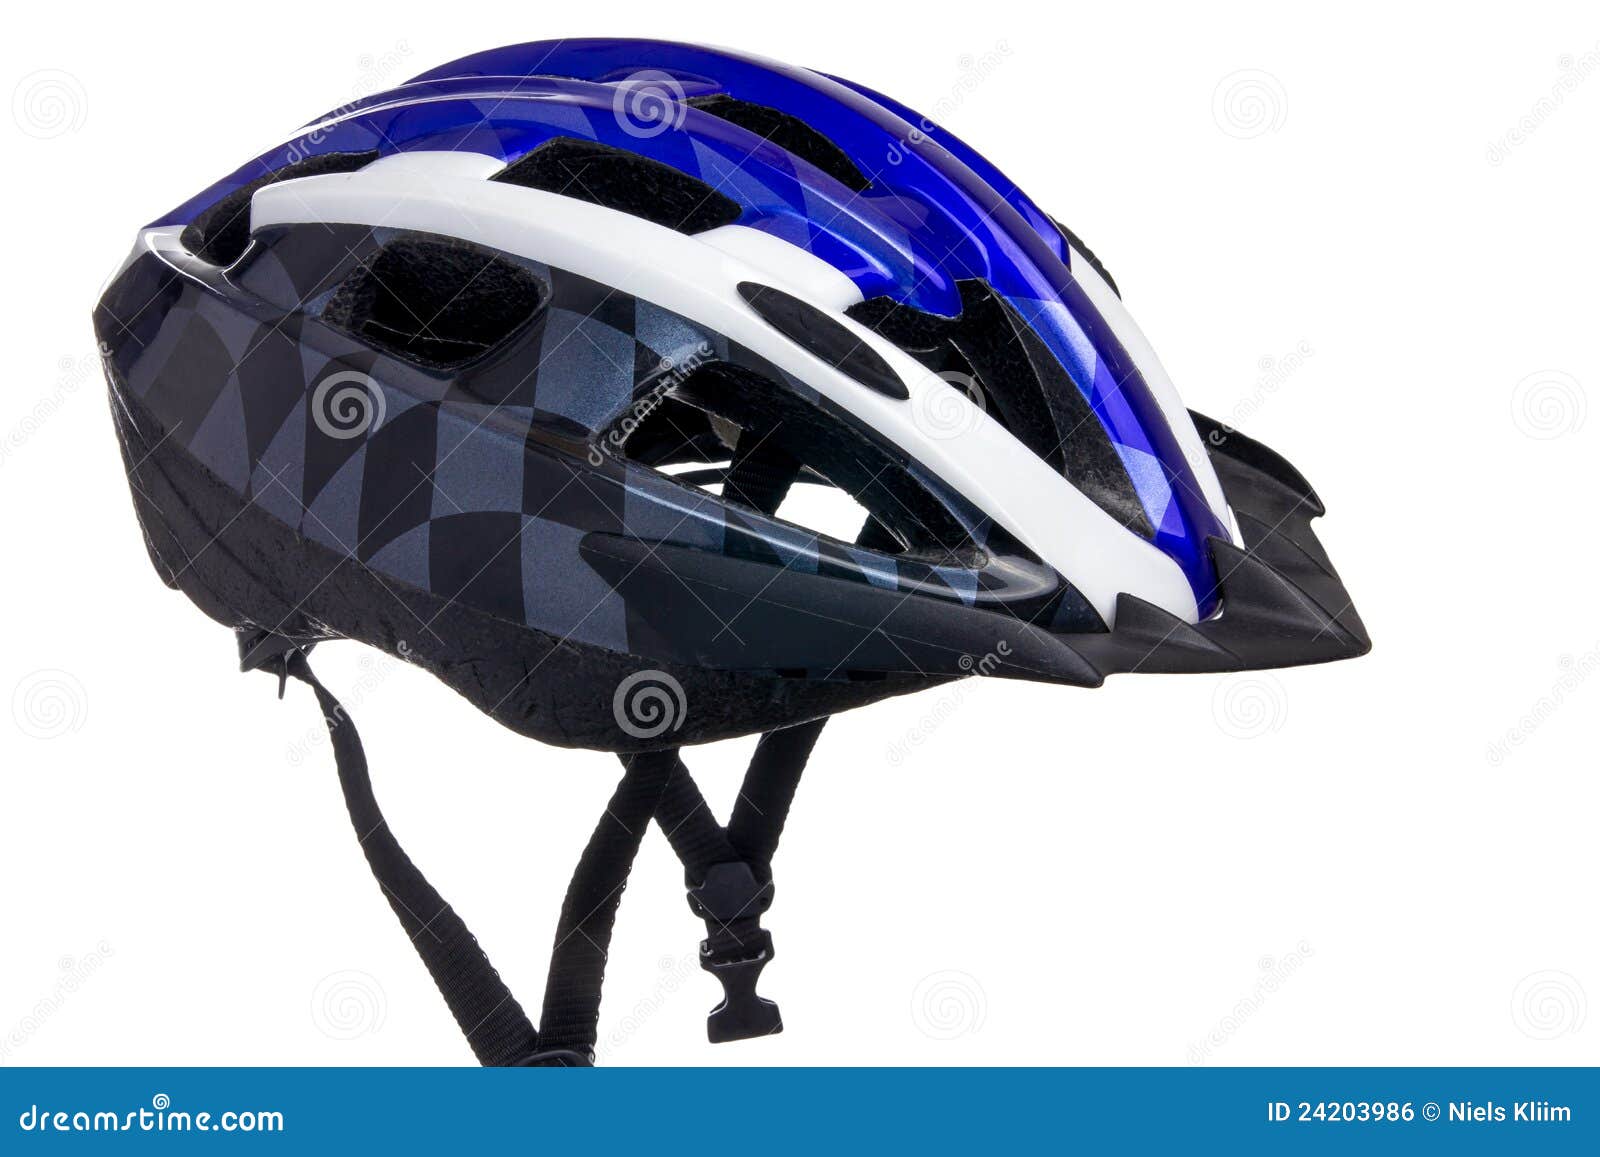 clipart bicycle helmet - photo #48